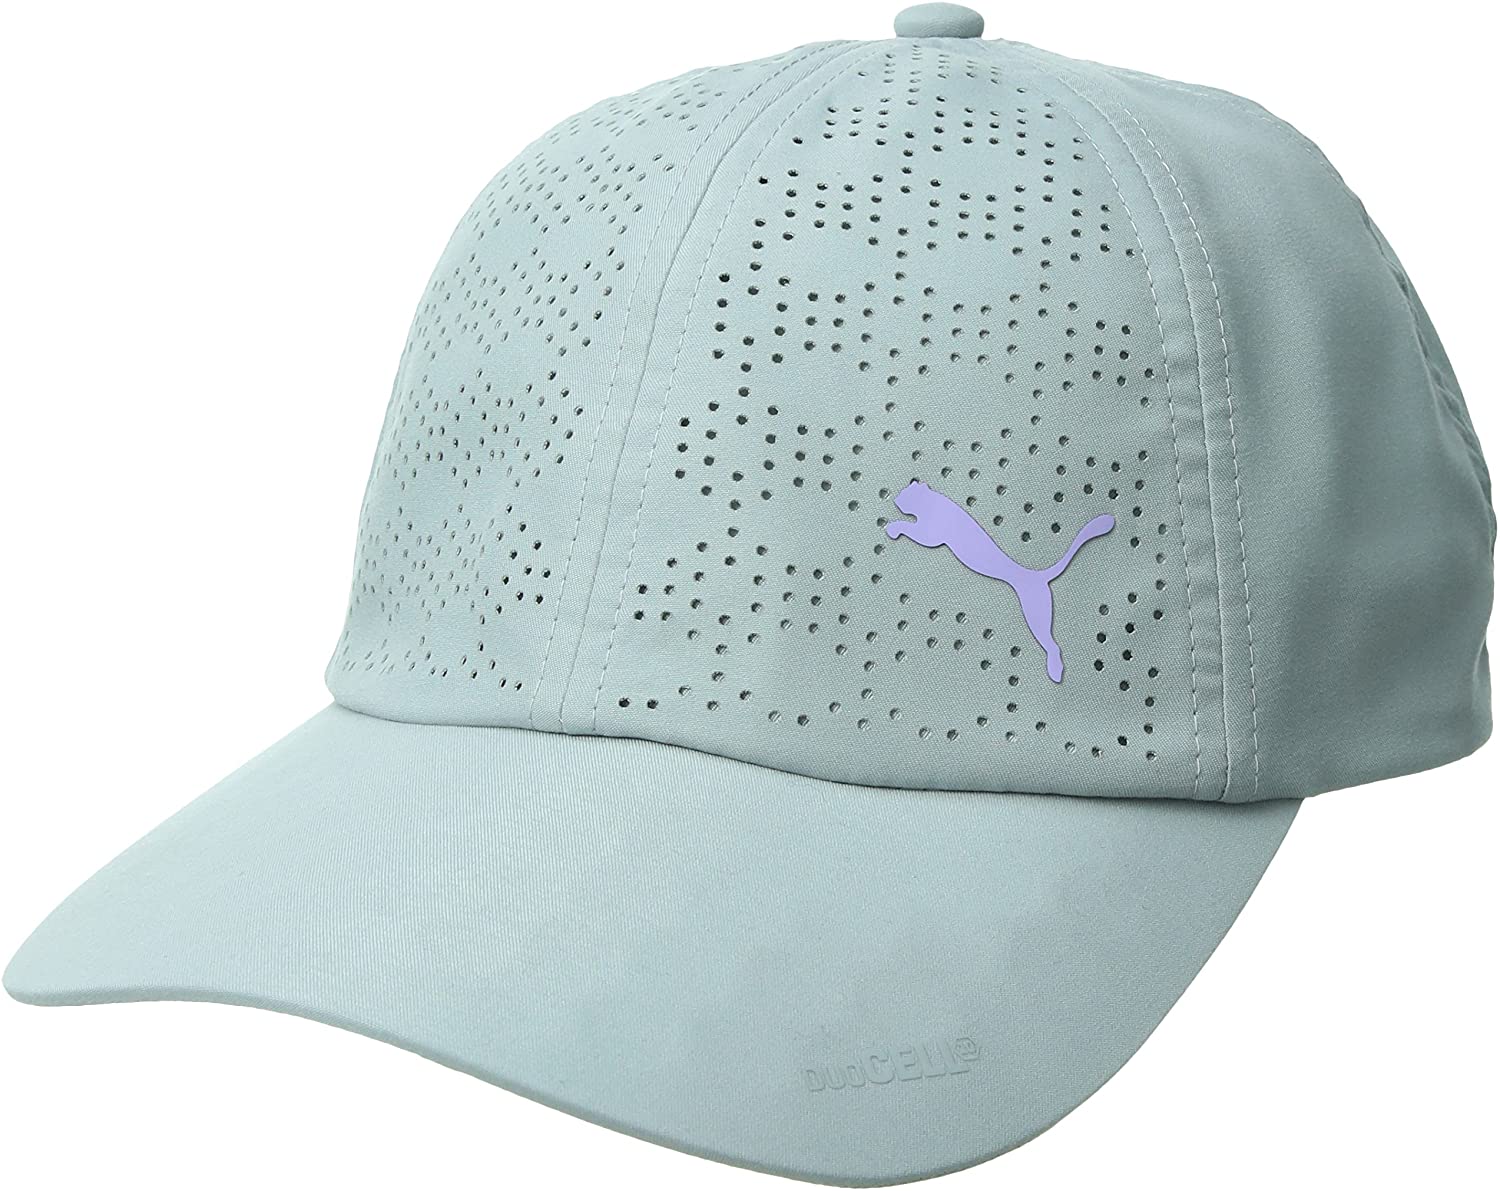 Puma Womens 2018 Duocell Golf Hats